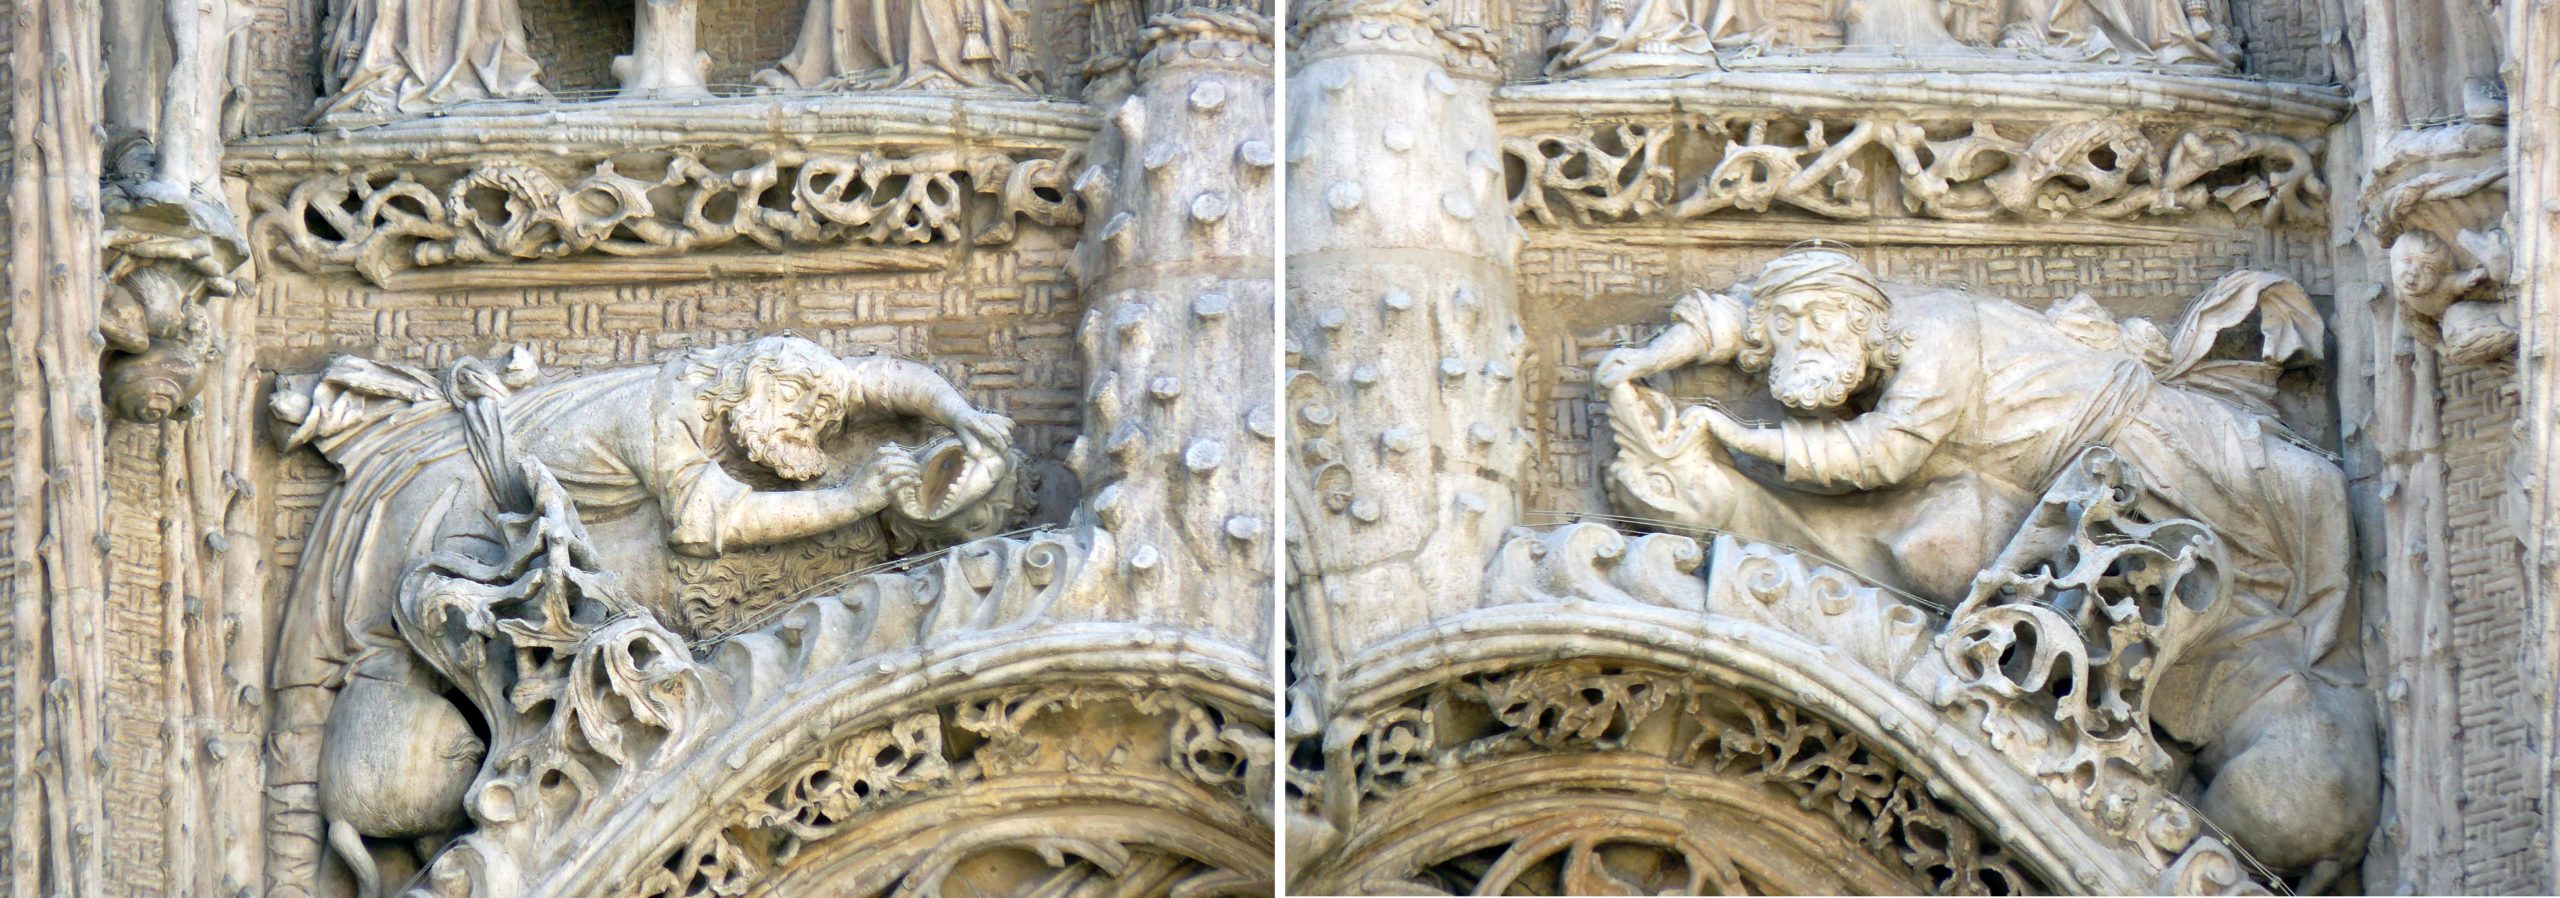 Spandrels above the tympanum, Façade of San Gregorio, Valladolid, Spain (photo: Rowanwindwhistler, CC BY-SA 3.0)